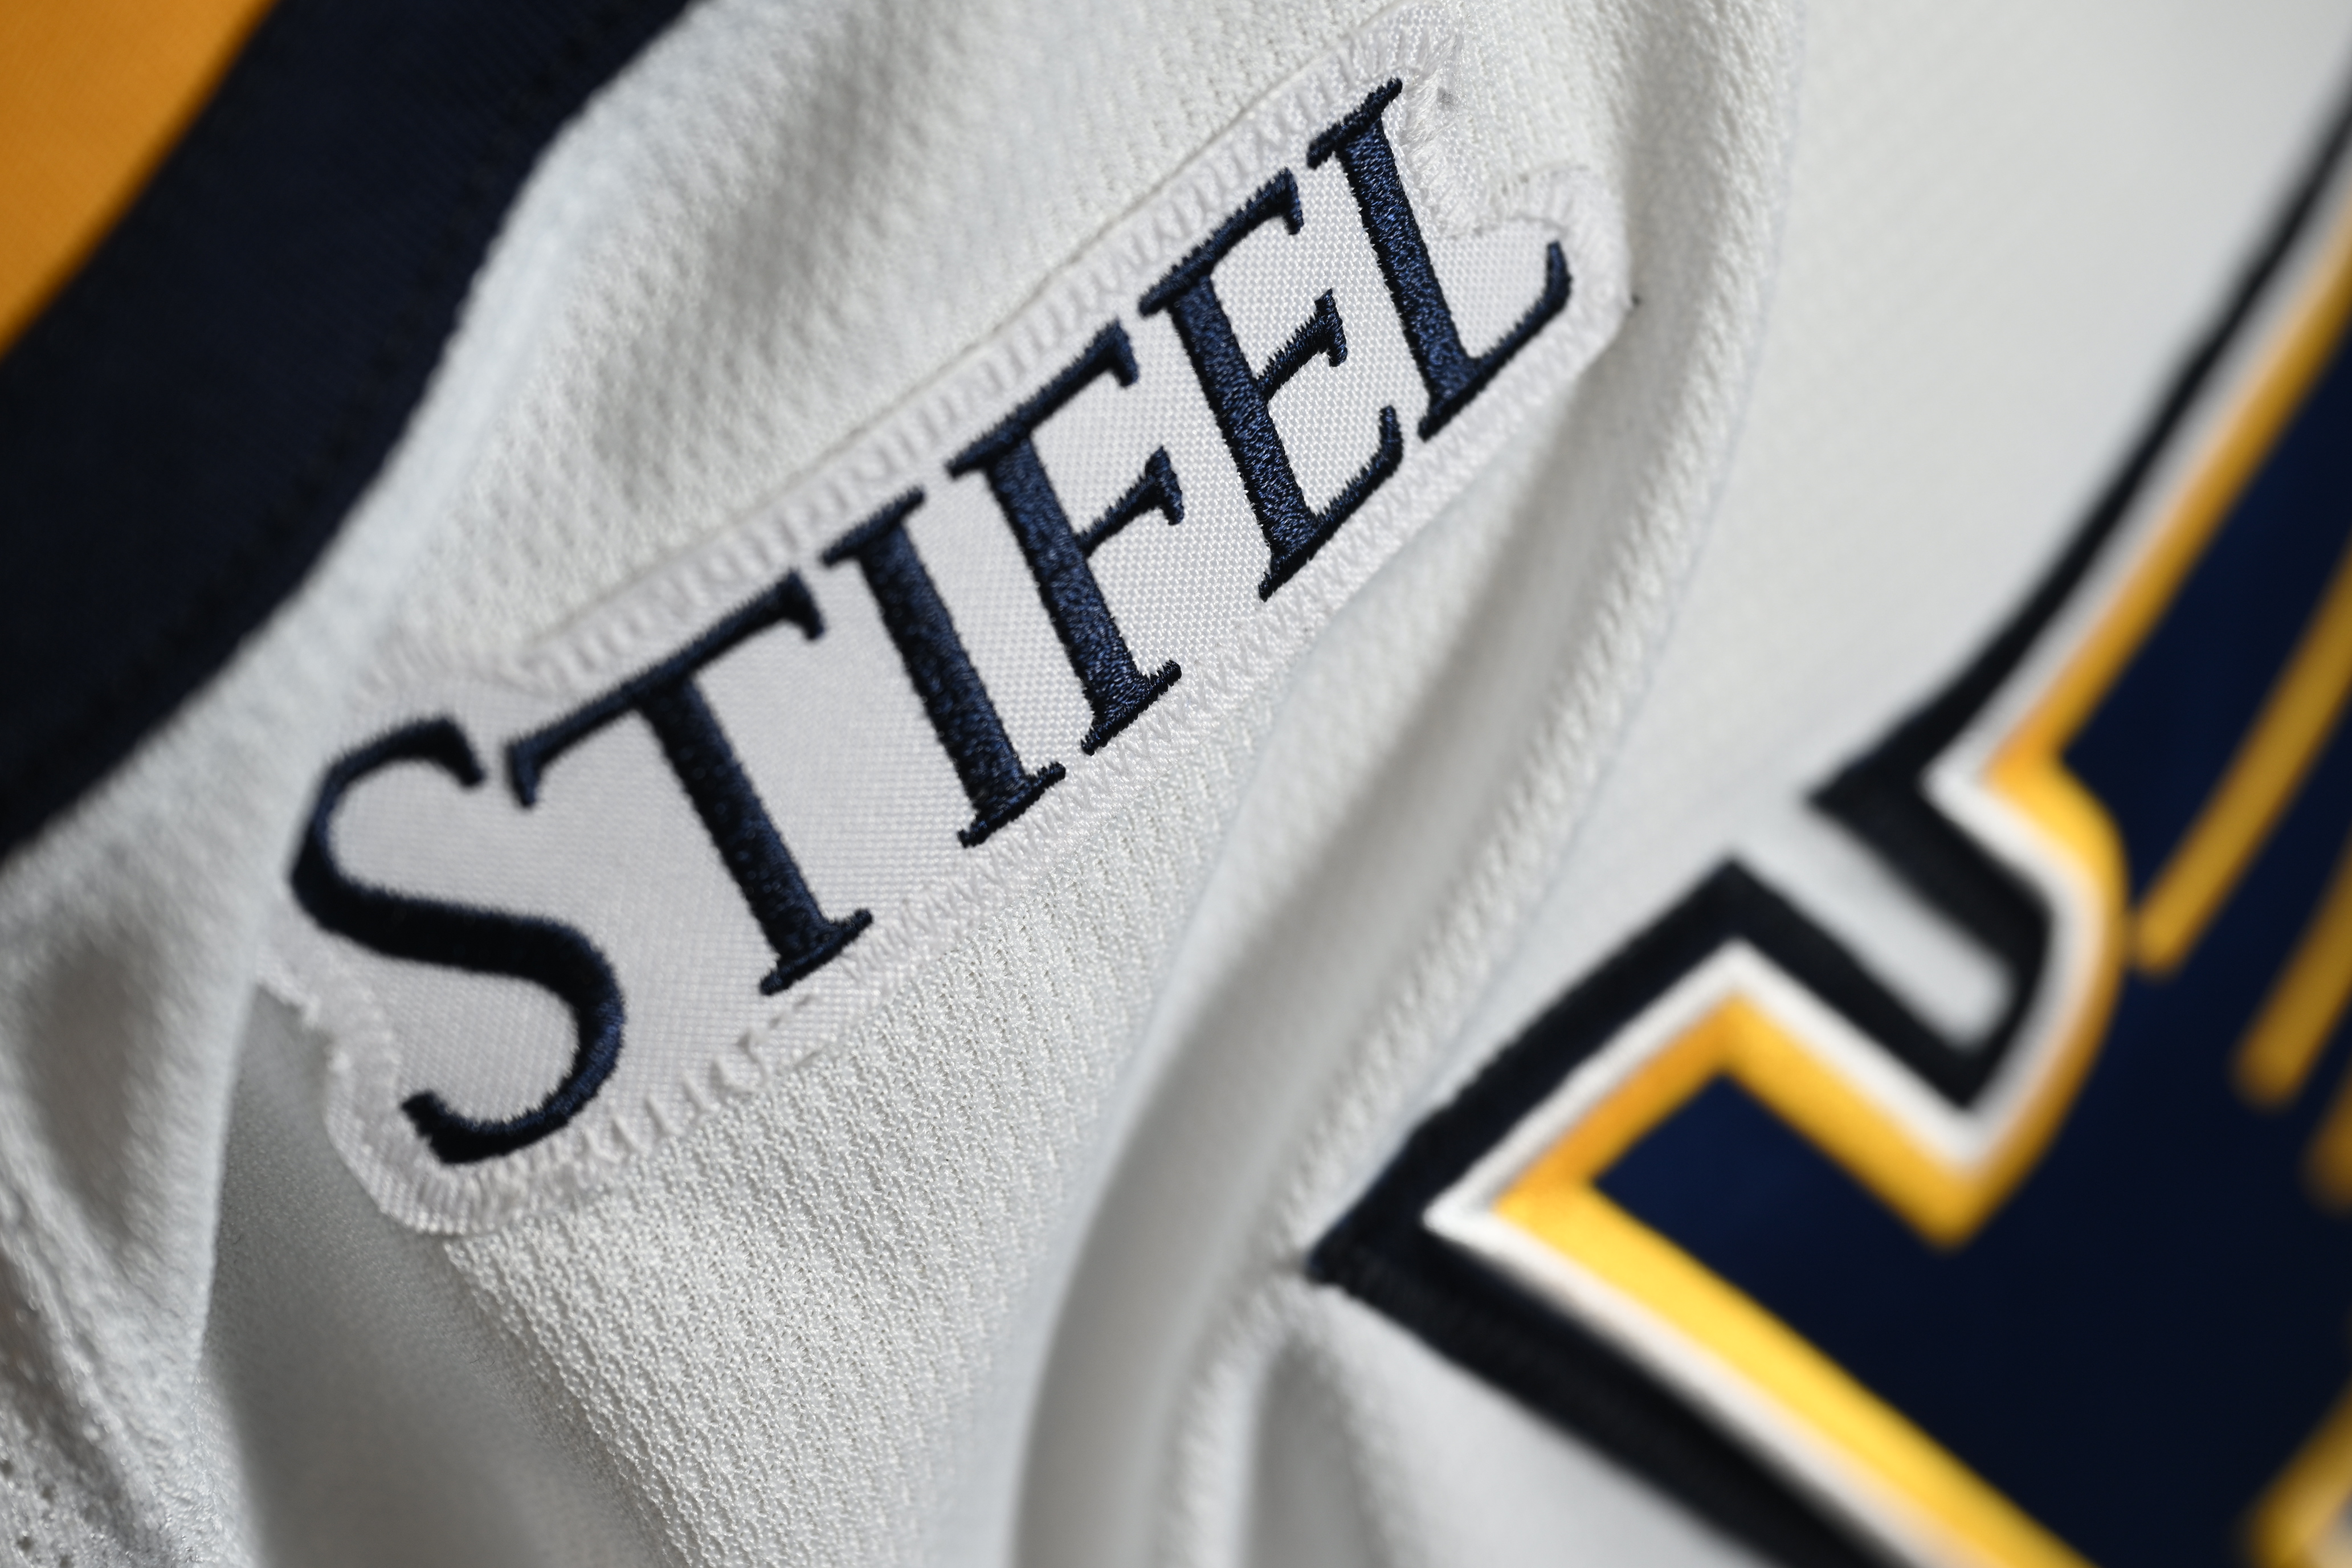 Blues announce Stifel as official jersey sponsor